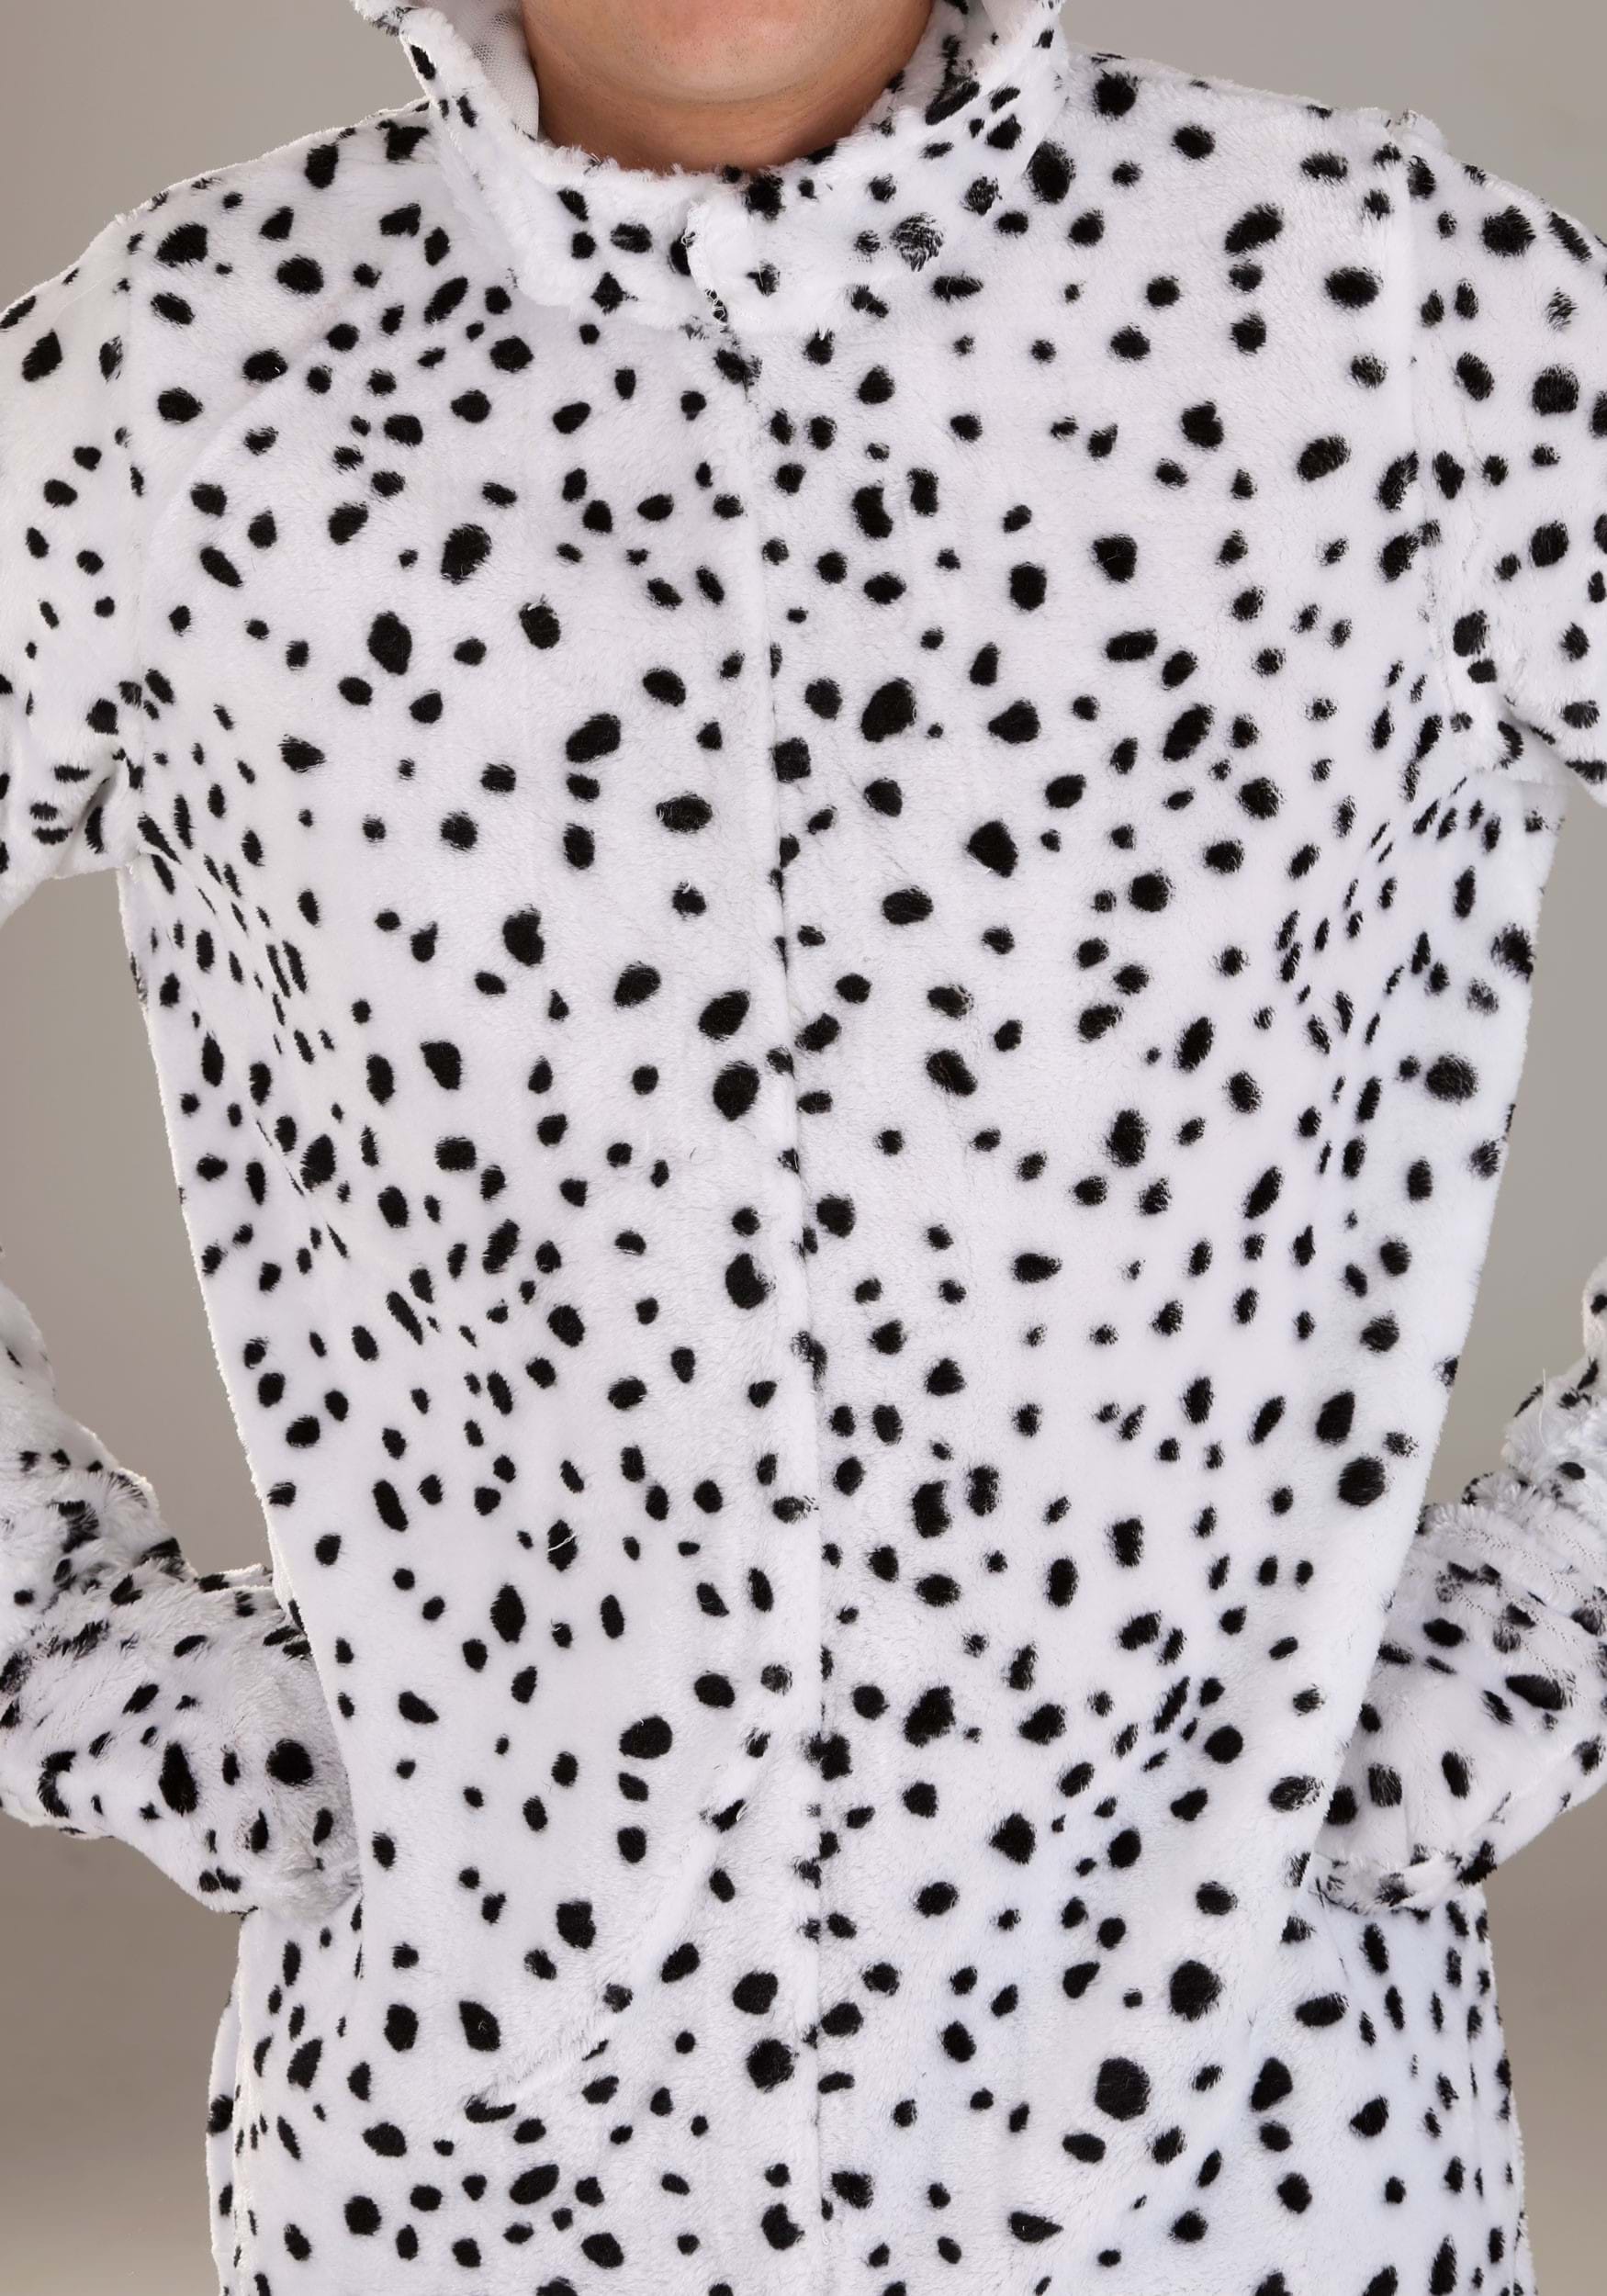 Adult Dalmatian Dog T-Shirt Men -Image by Shutterstock, Male 3X-Large